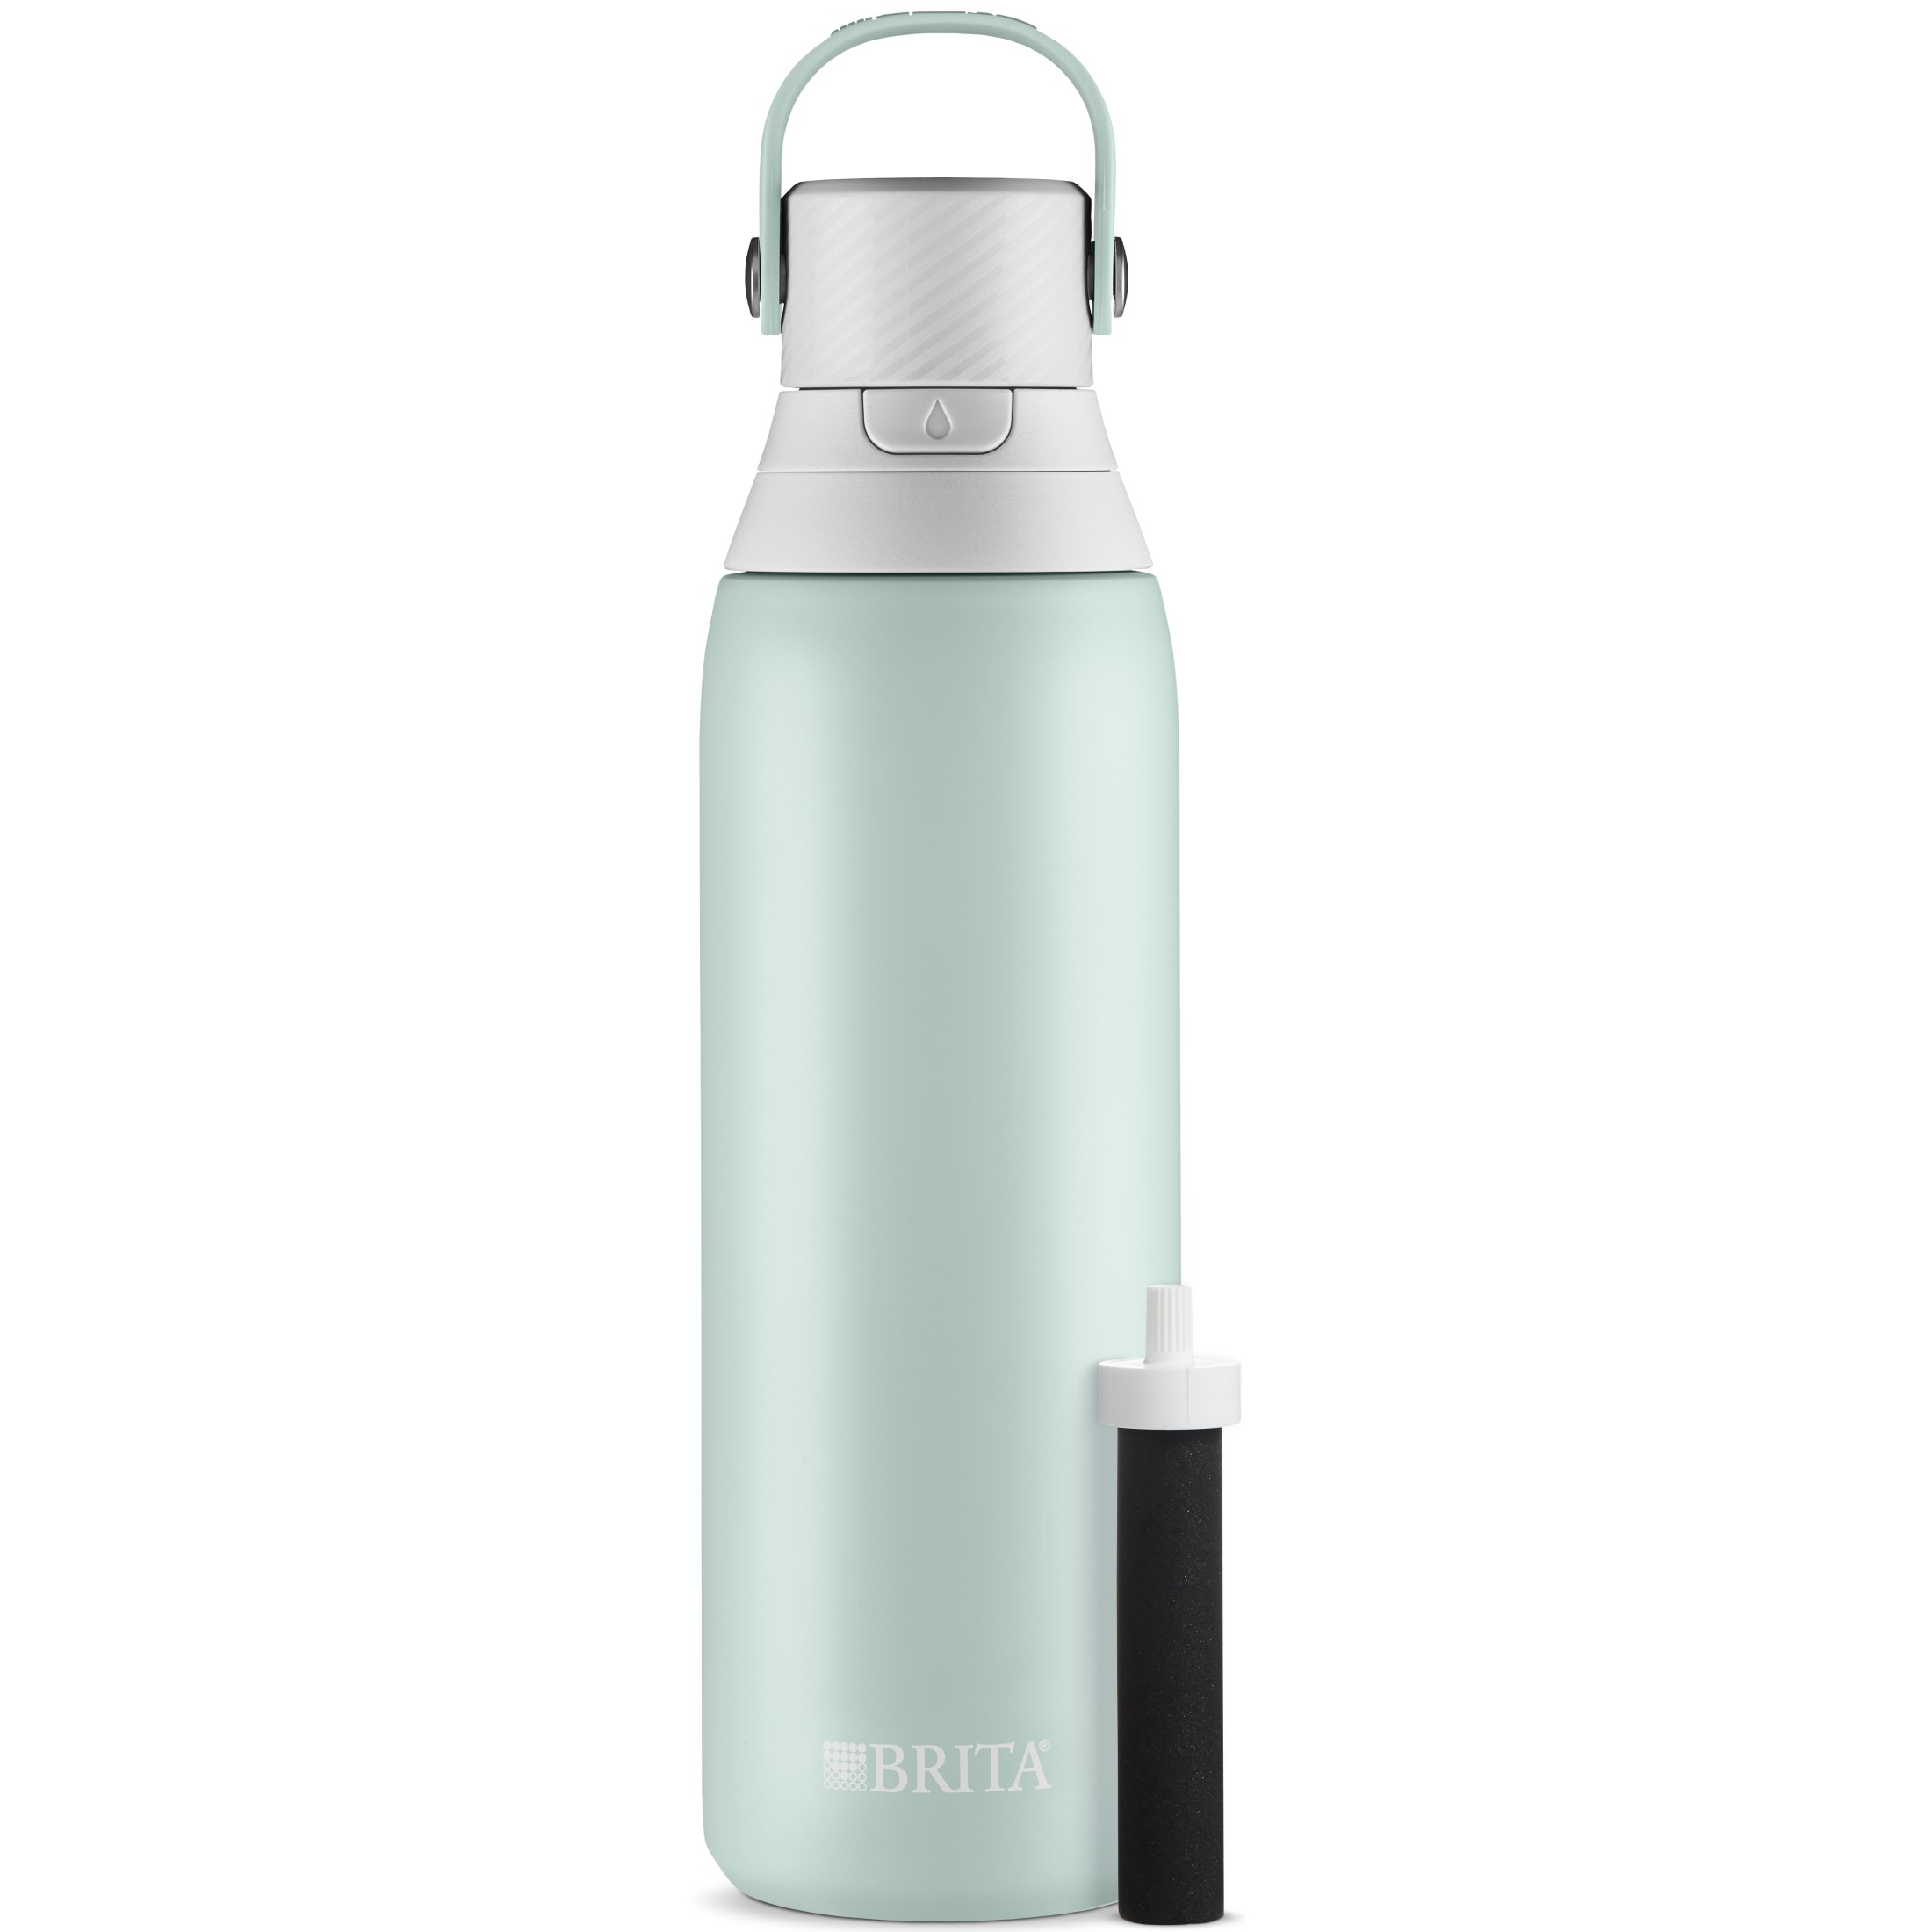 Brita Premium Stainless Steel Leak Proof Filtered Water Bottle, Glacier, 20 oz - image 1 of 11